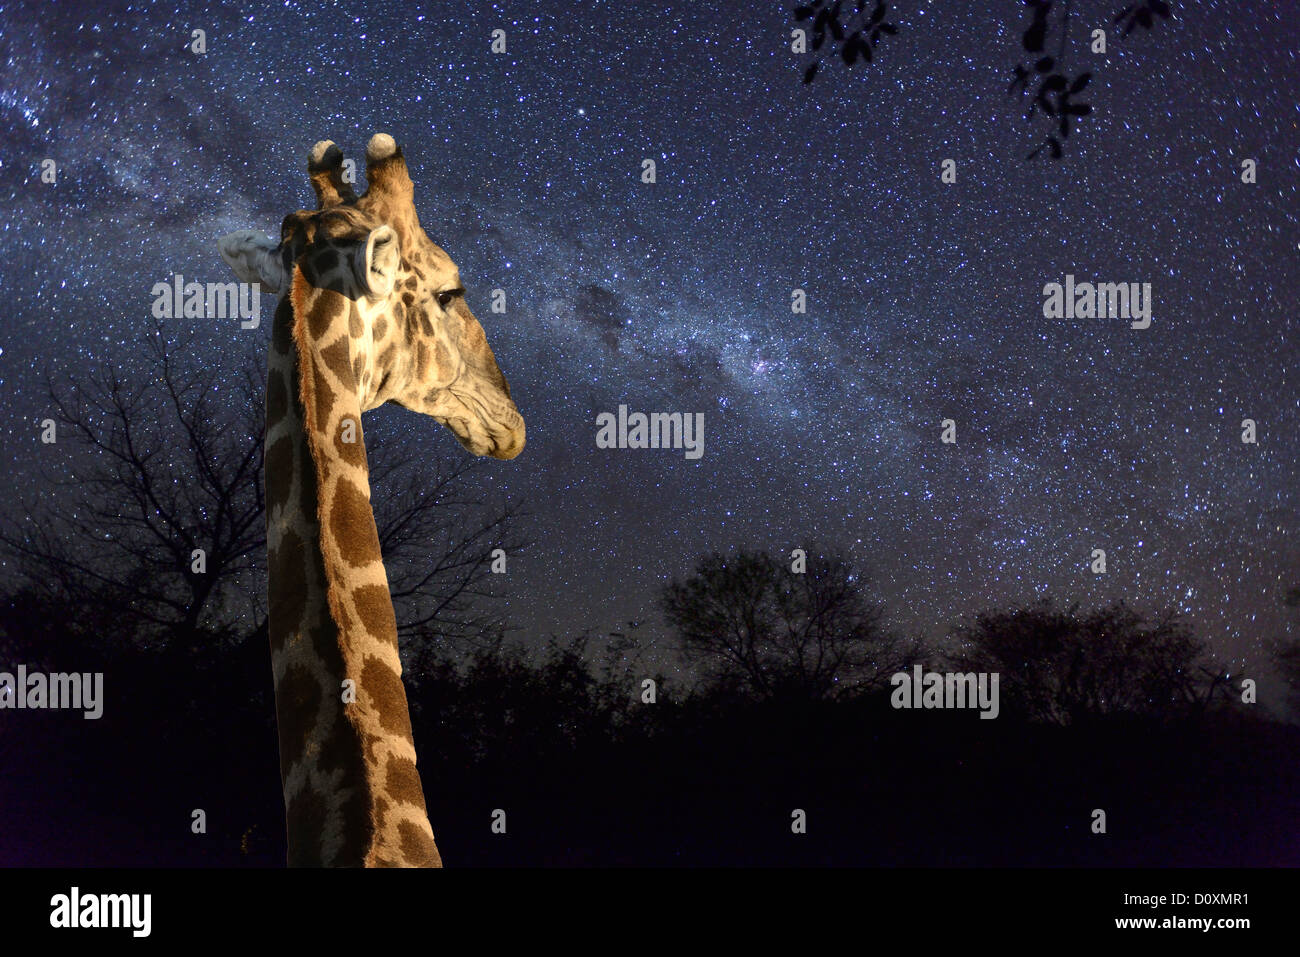 Africa, Southern, Namibiai, Nacht, Himmel, Sterne, Astro, Fotografie, spangled Himmel, Sternenhimmel, Giraffe, Grootfontein Stockfoto